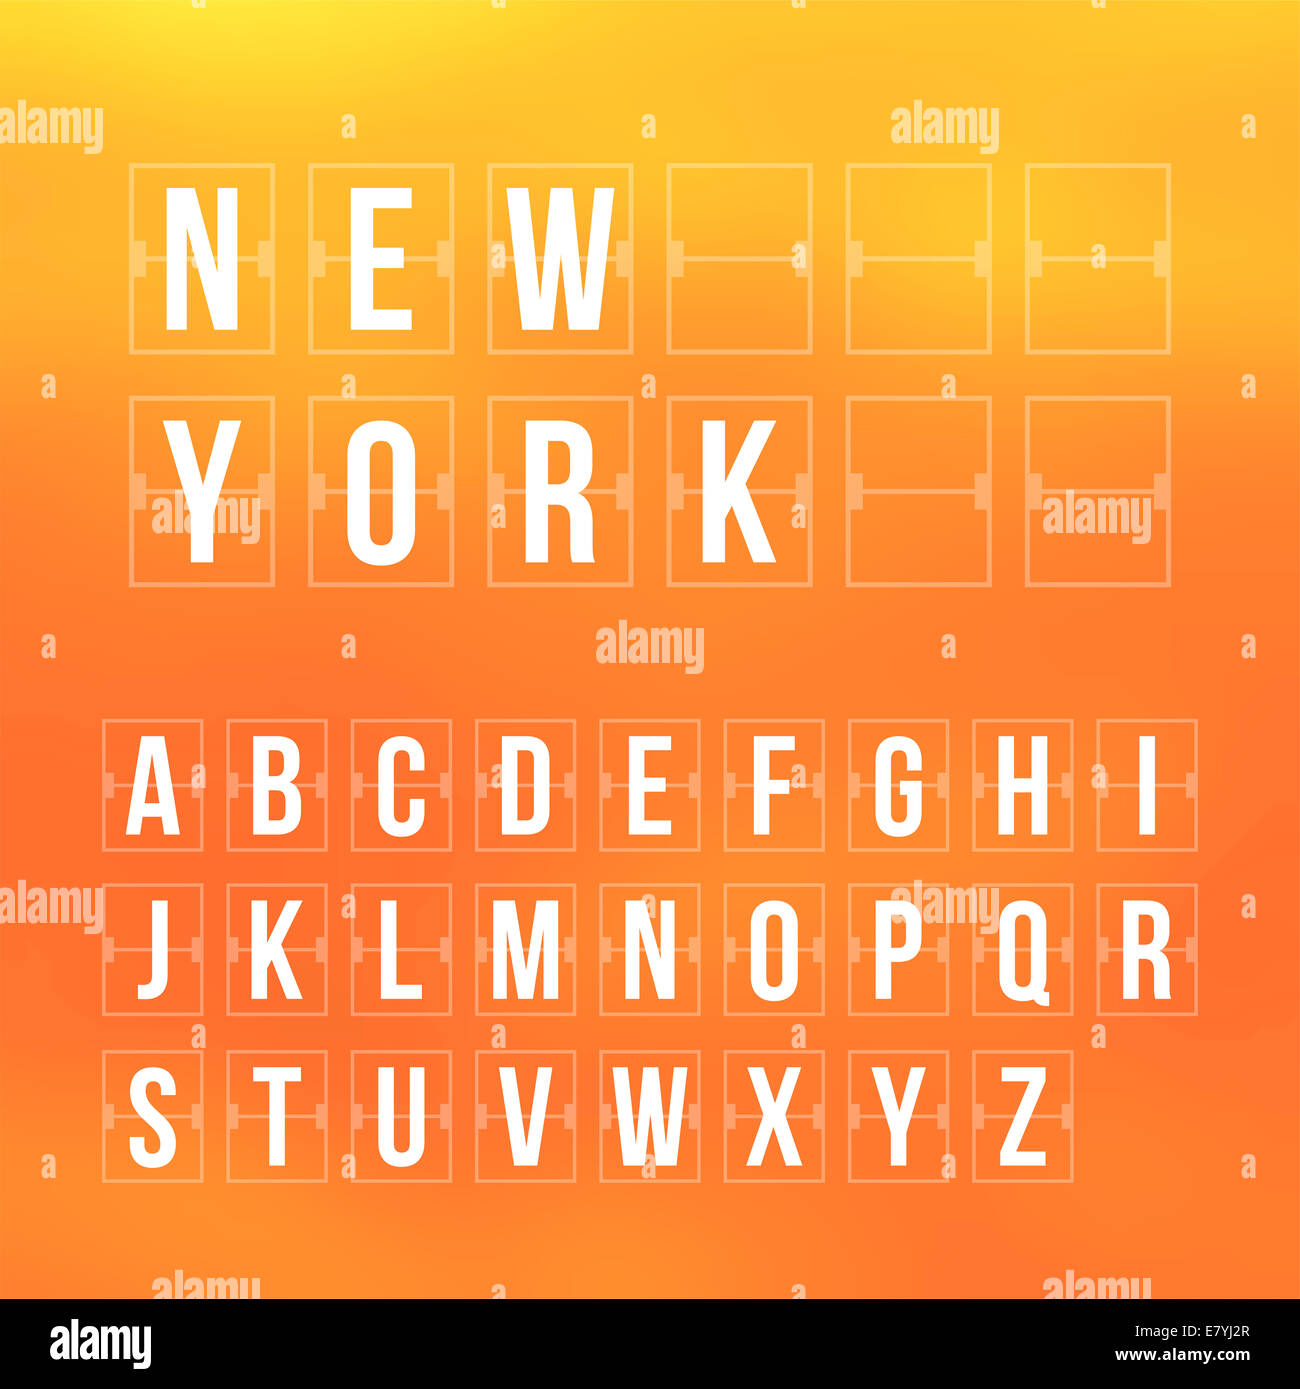 Outline scoreboard letters and symbols flat alphabet panel Stock Photo